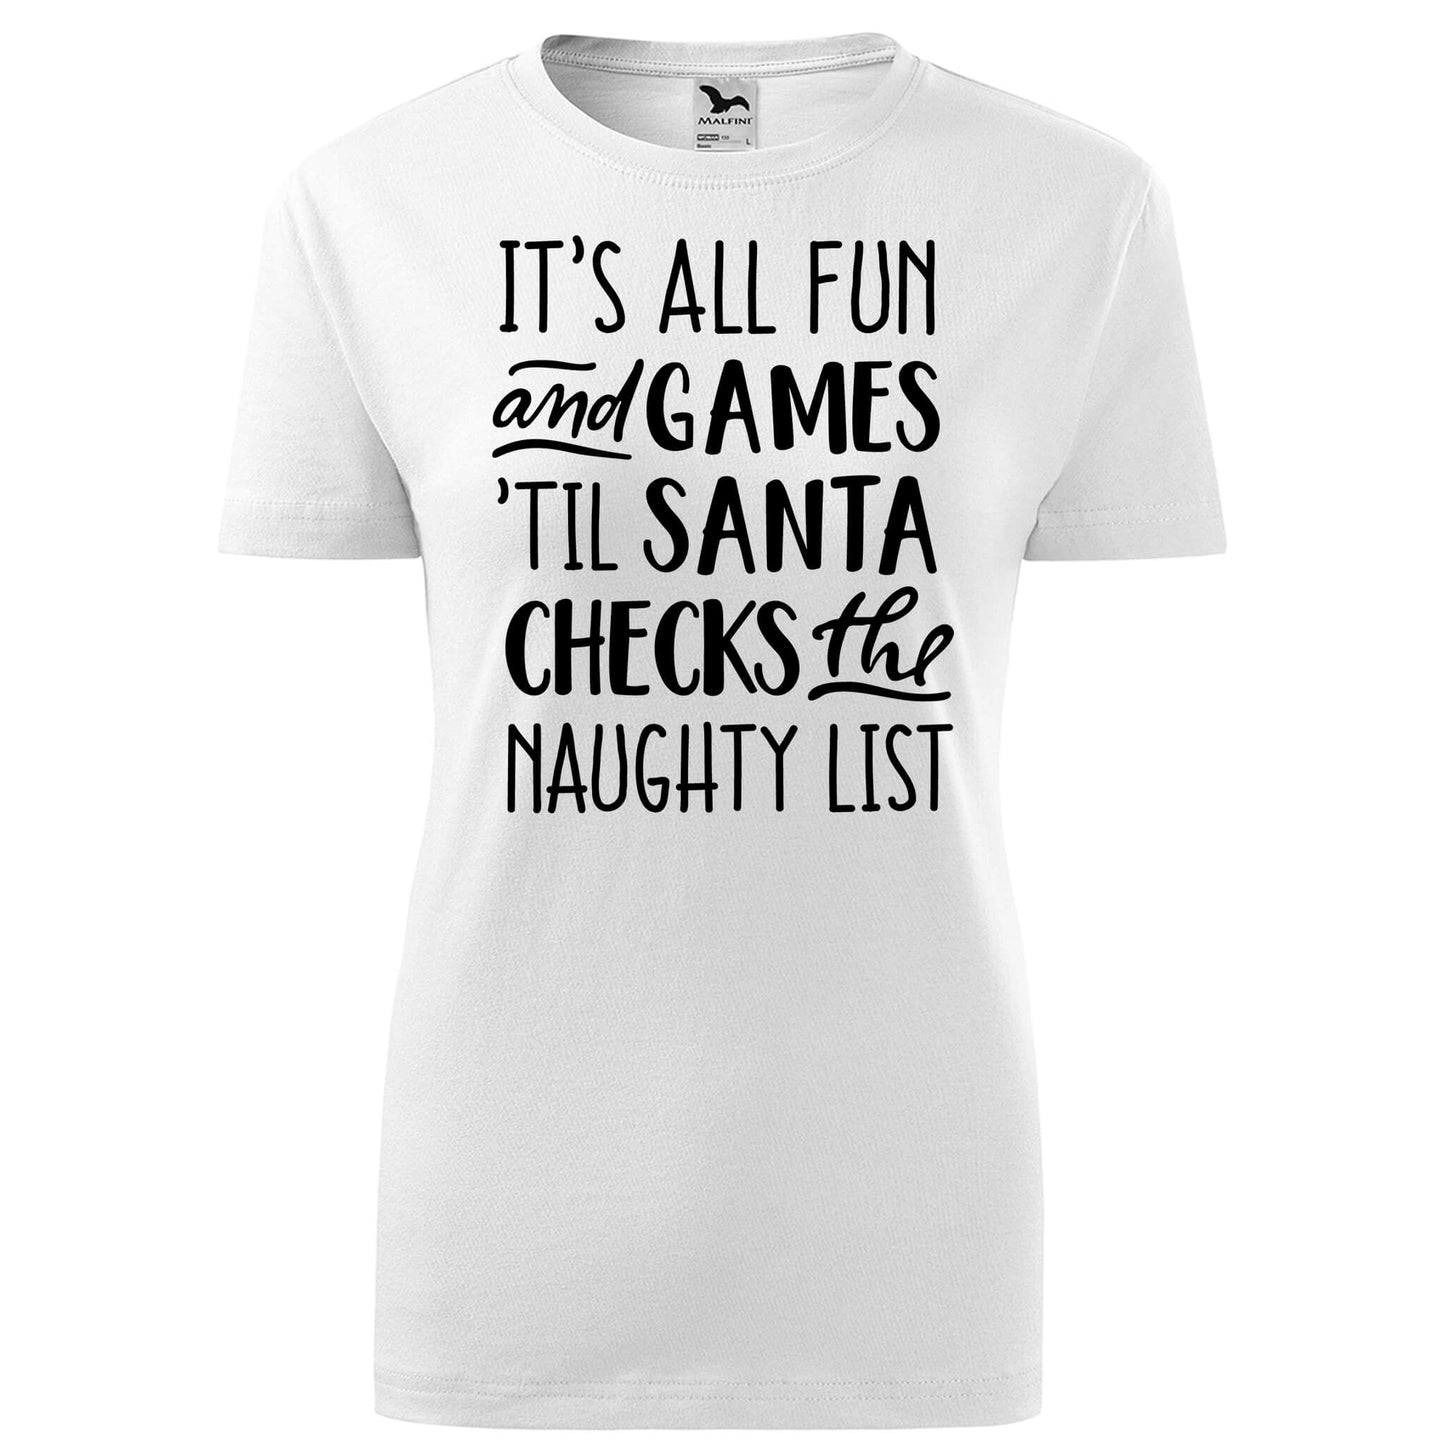 Fun and games naughty list t-shirt - rvdesignprint